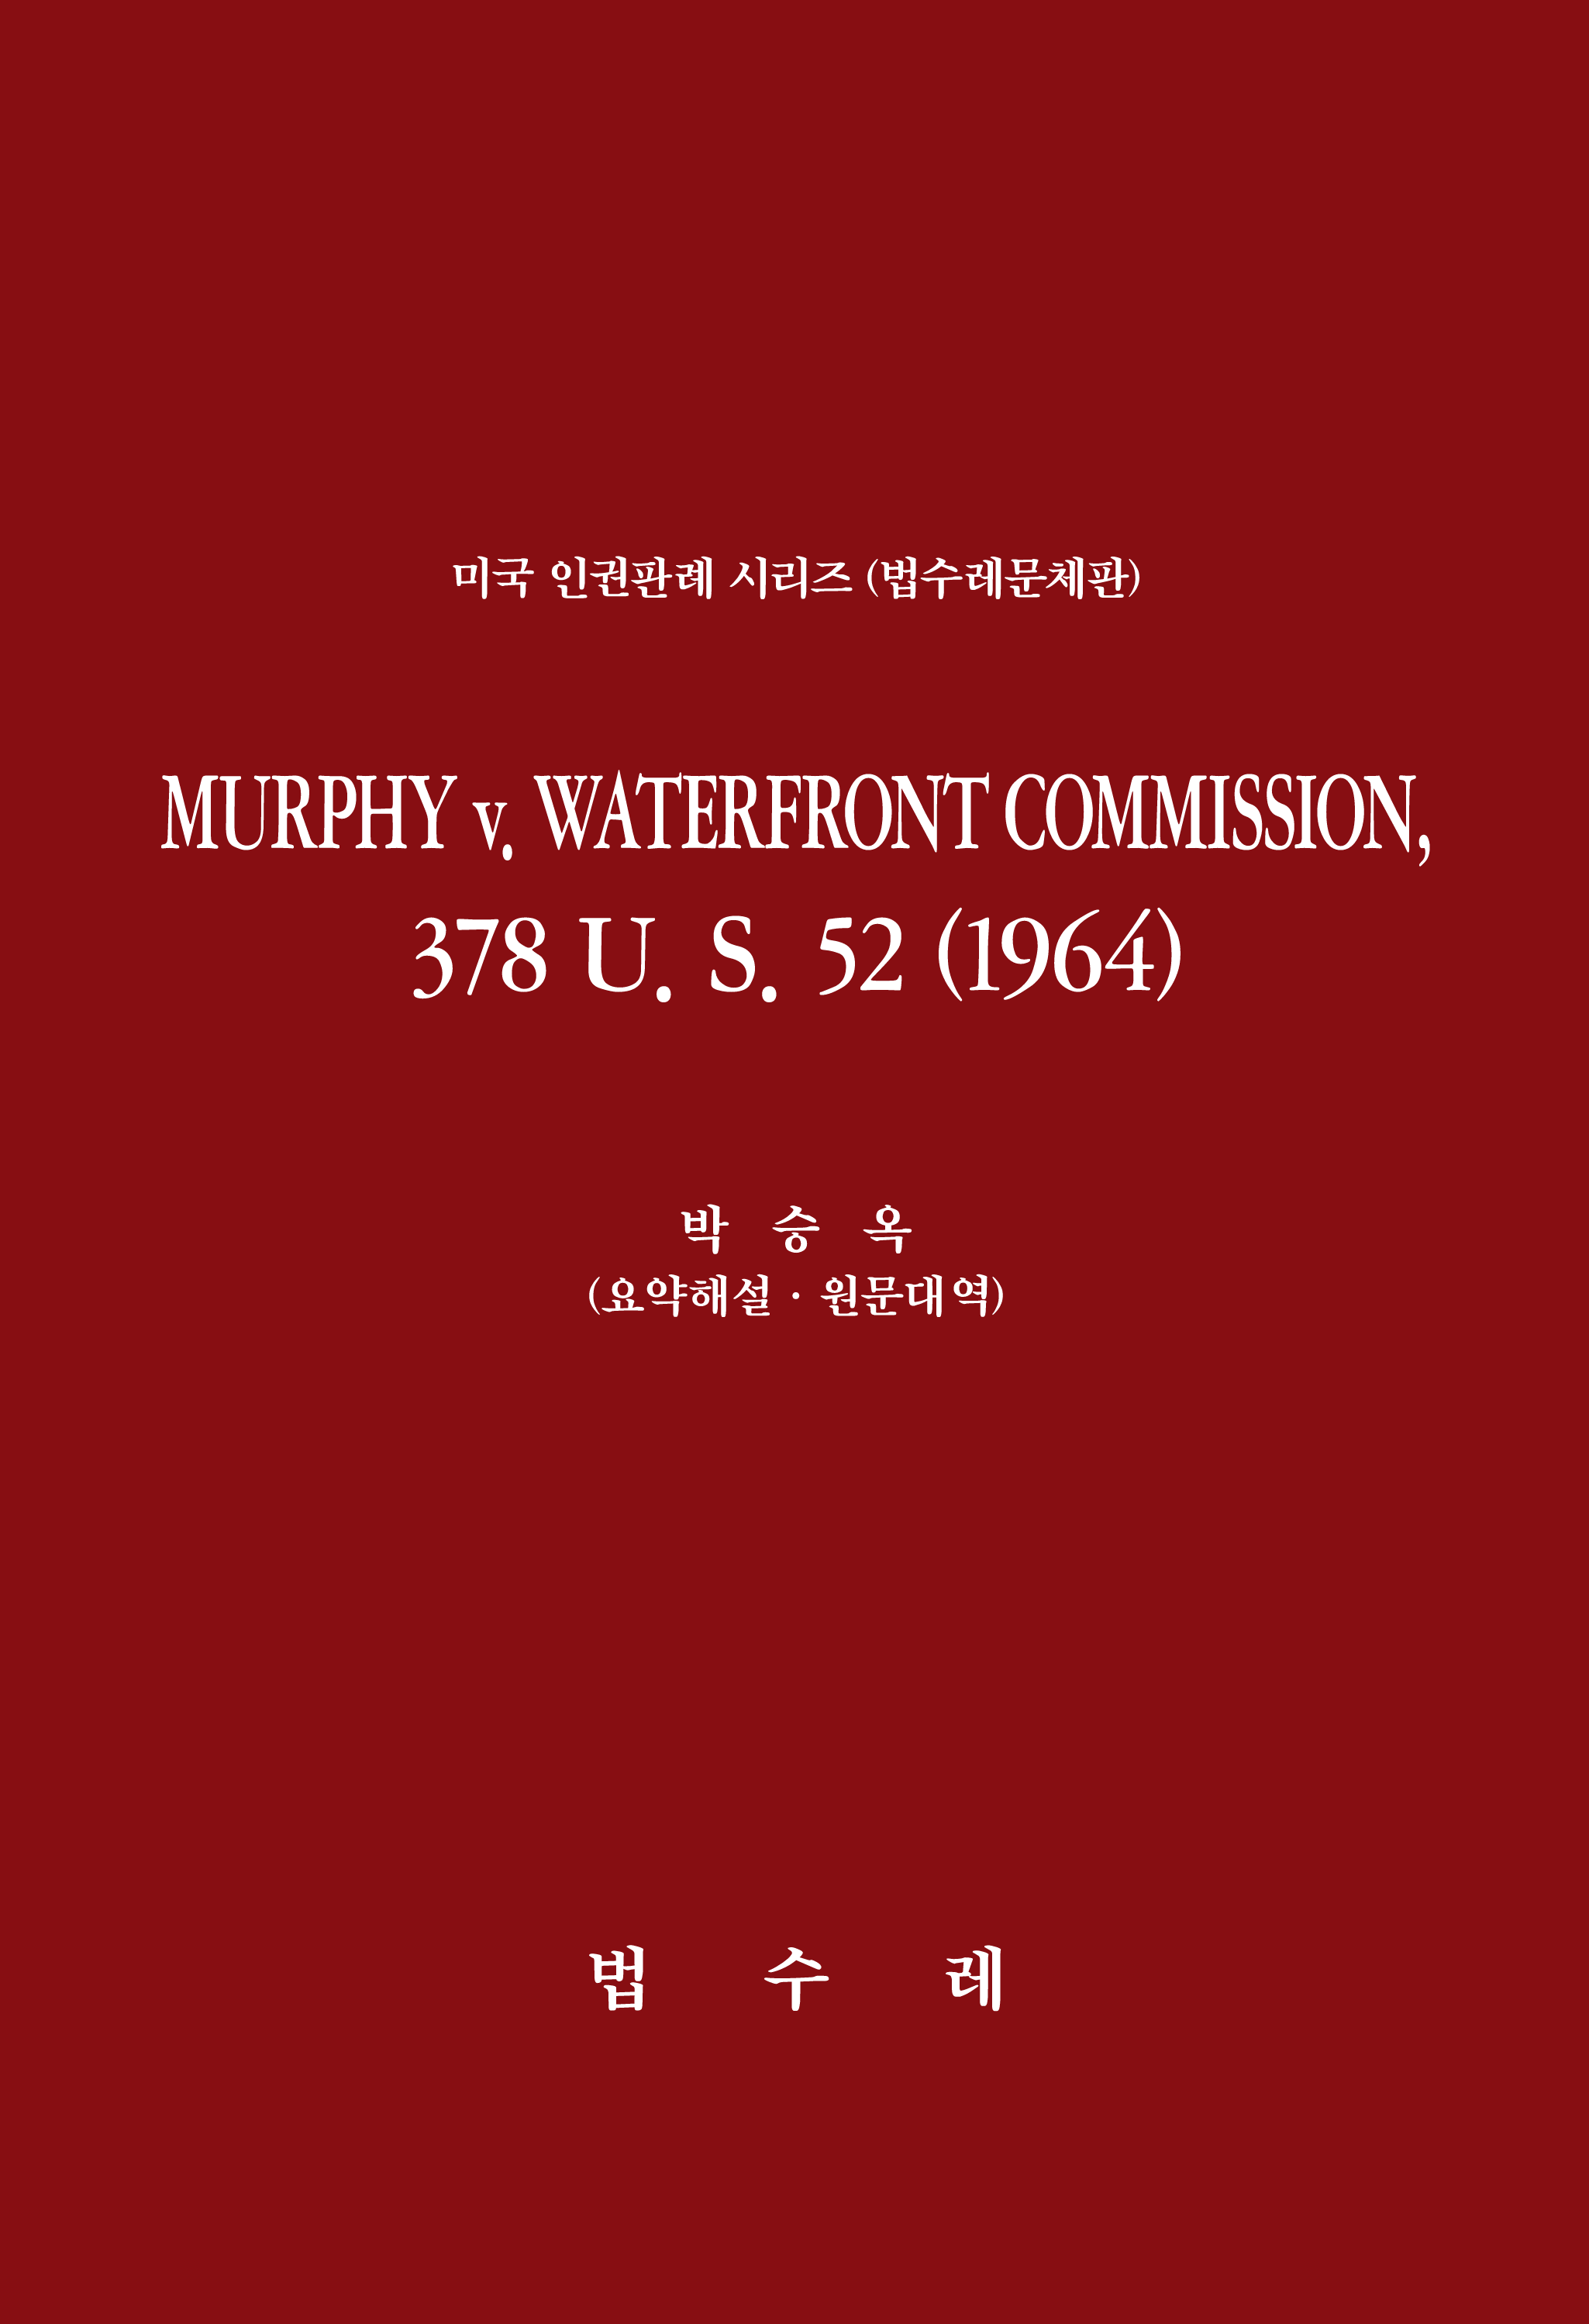 MURPHY v. WATERFRONT COMMISSION, 378 U. S. 52 (196